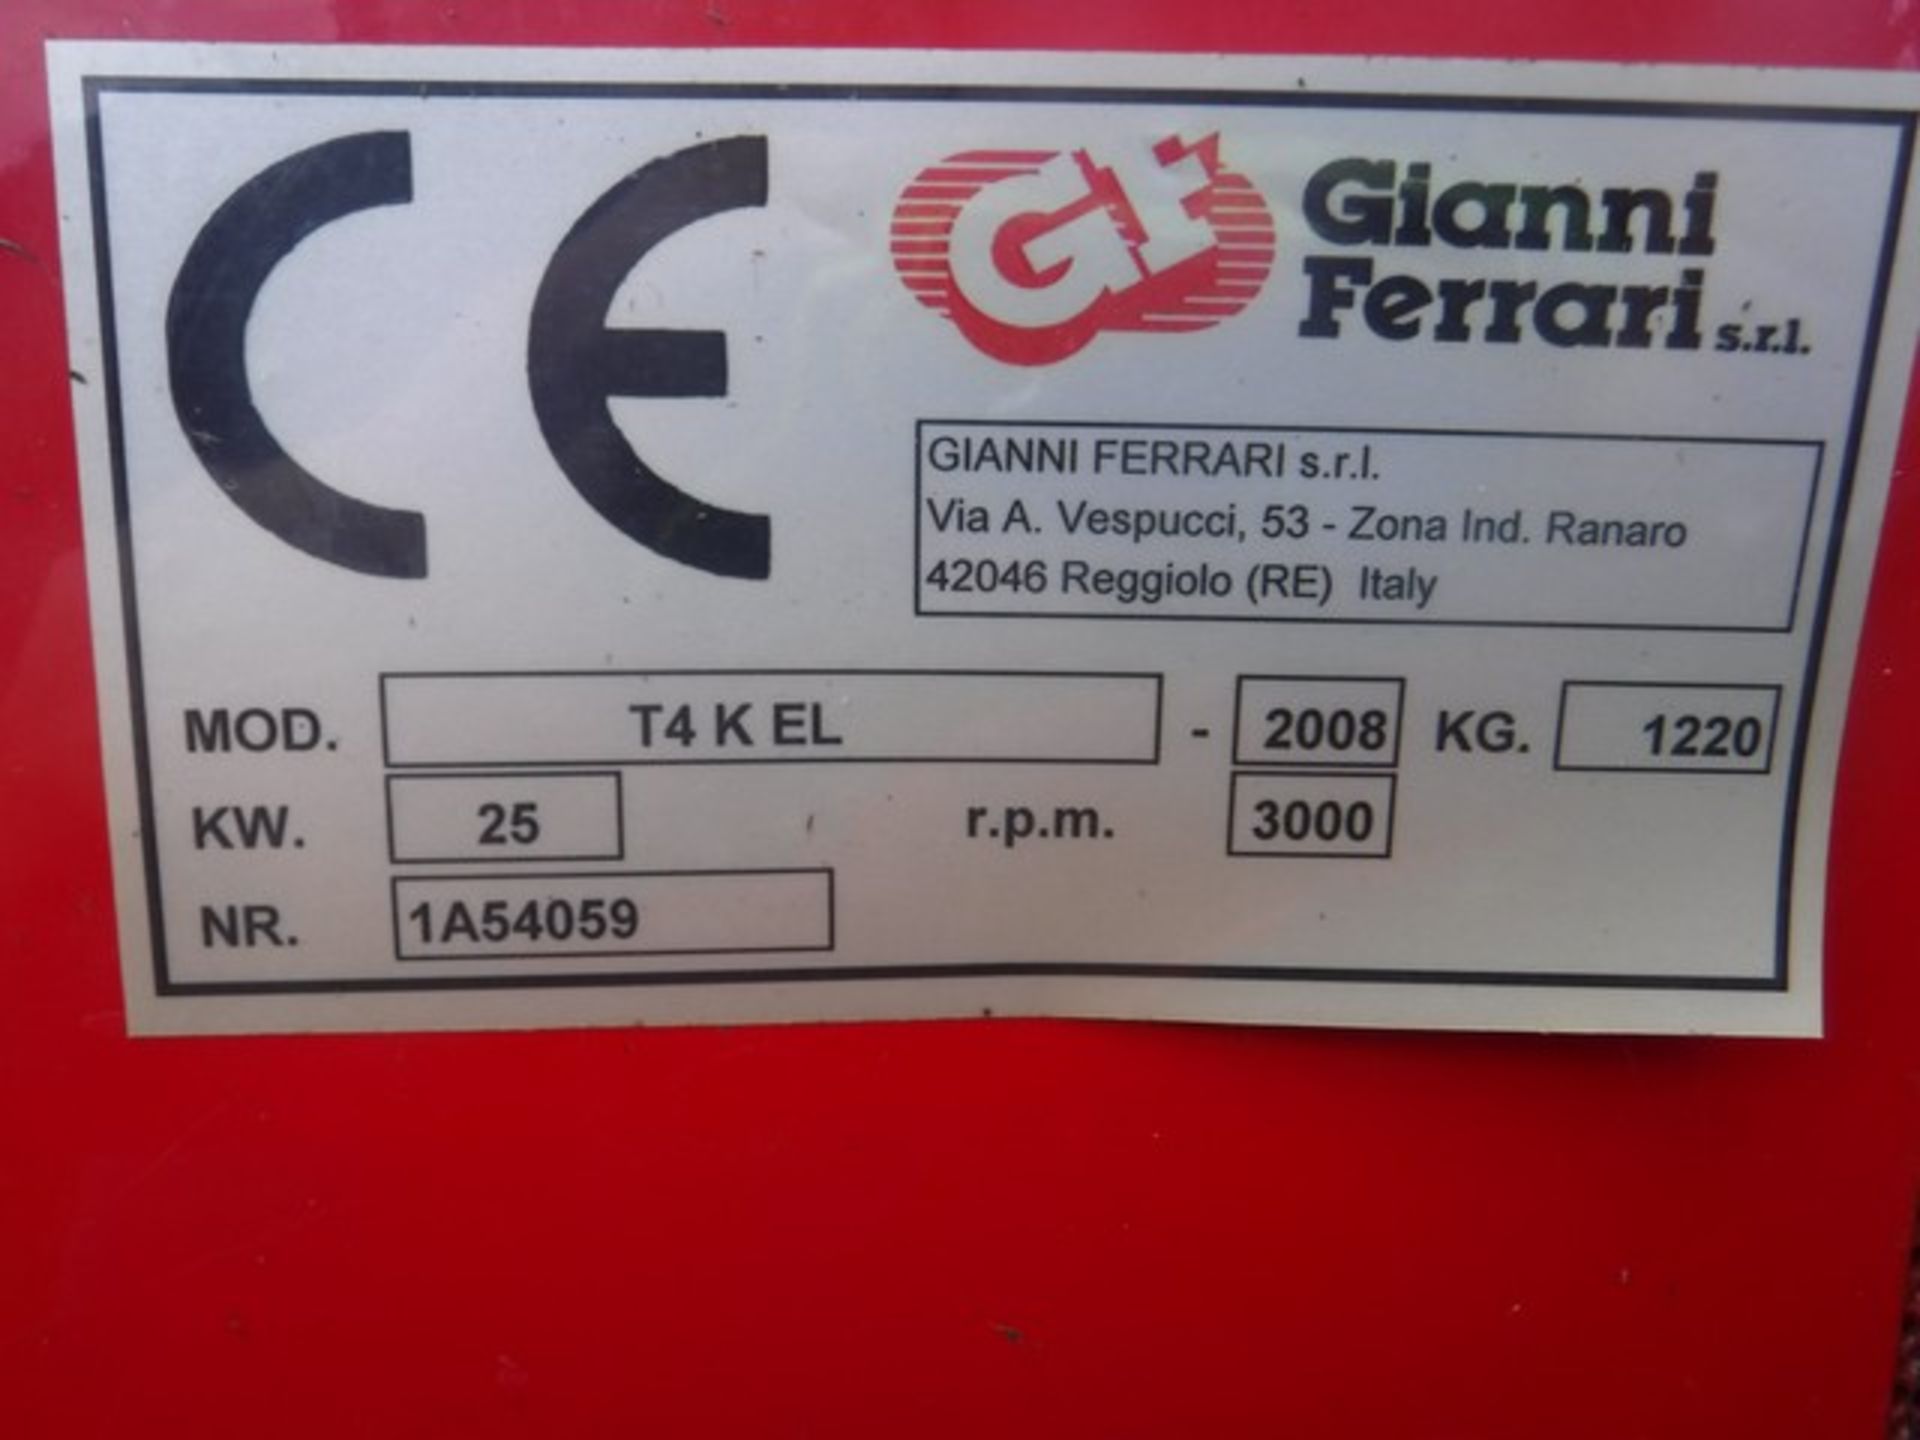 GIANNI FERRARI turbo 4 cut & collect mower.1661 hrs (not verified). Reg - SP09CVG. S/N 1A54059. Oper - Image 2 of 14